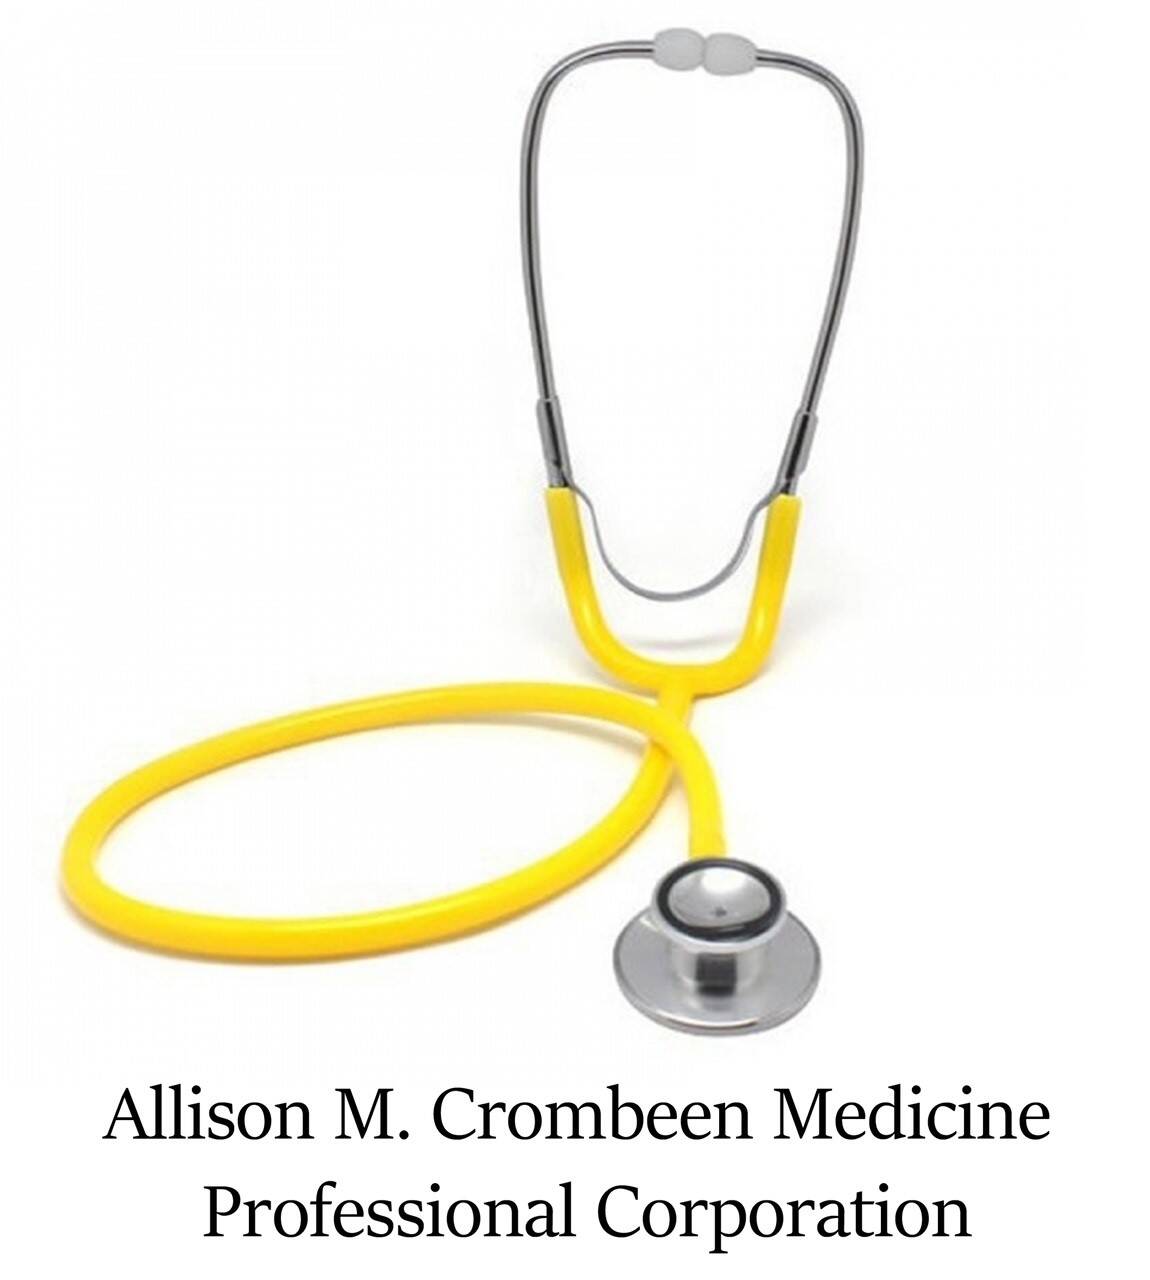 Allison N. Crombeen Medicine Professional Corporation